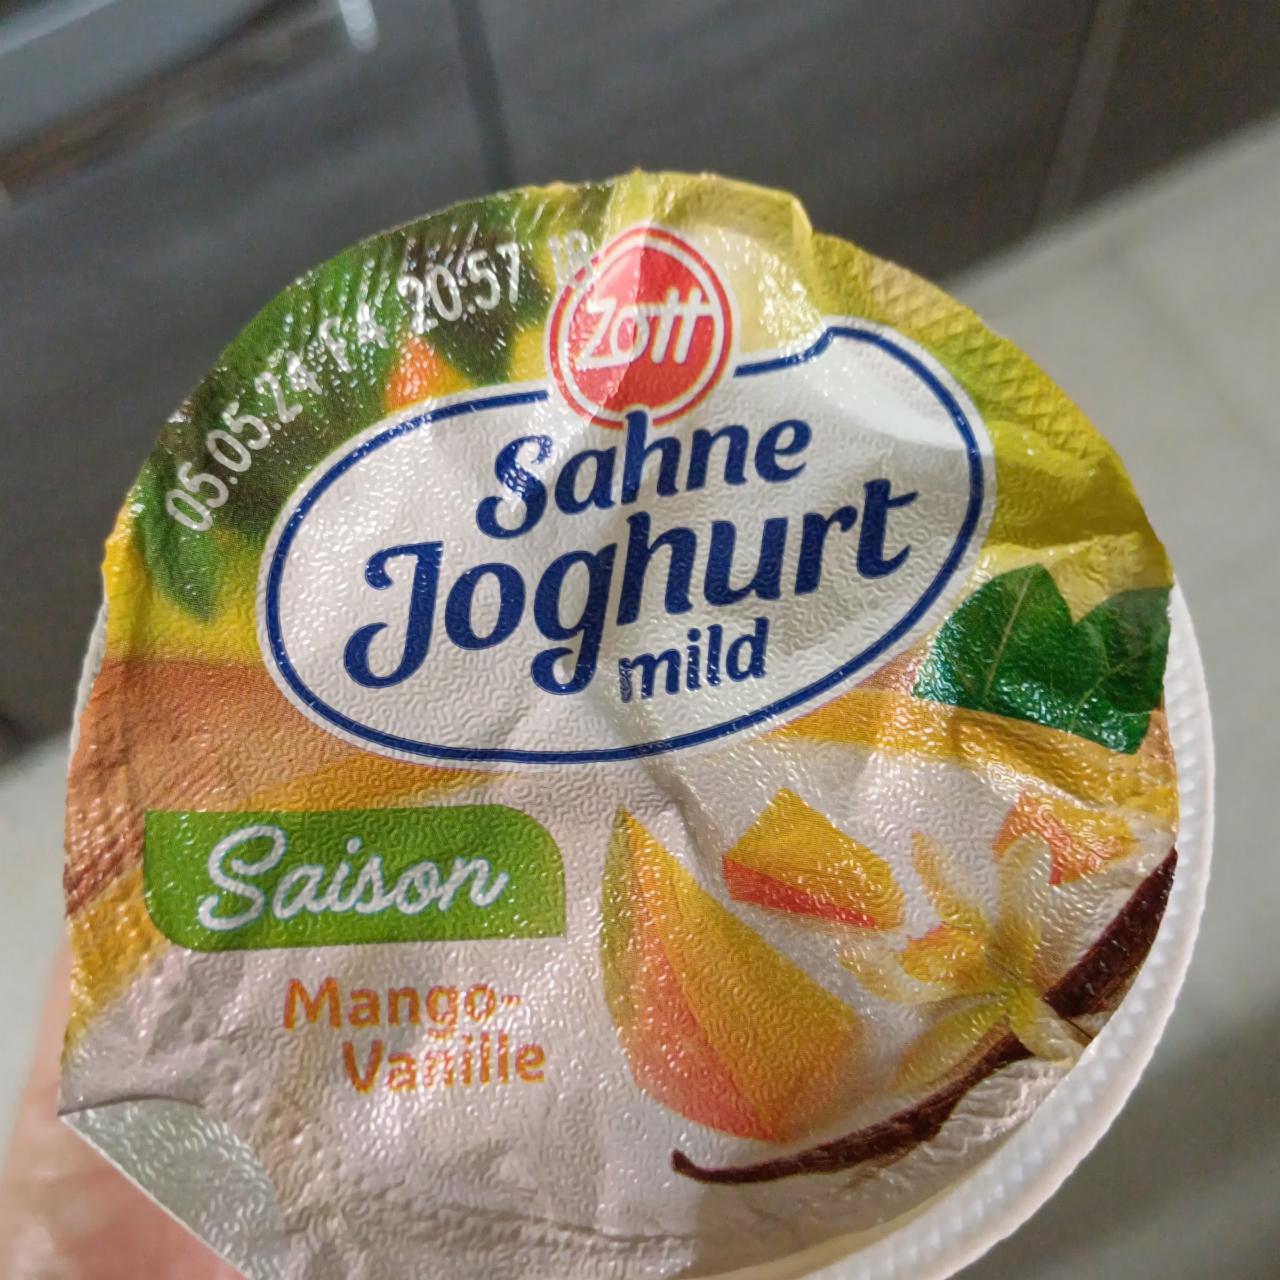 Zdjęcia - Sahne joghurt mild mango vanilia Zott